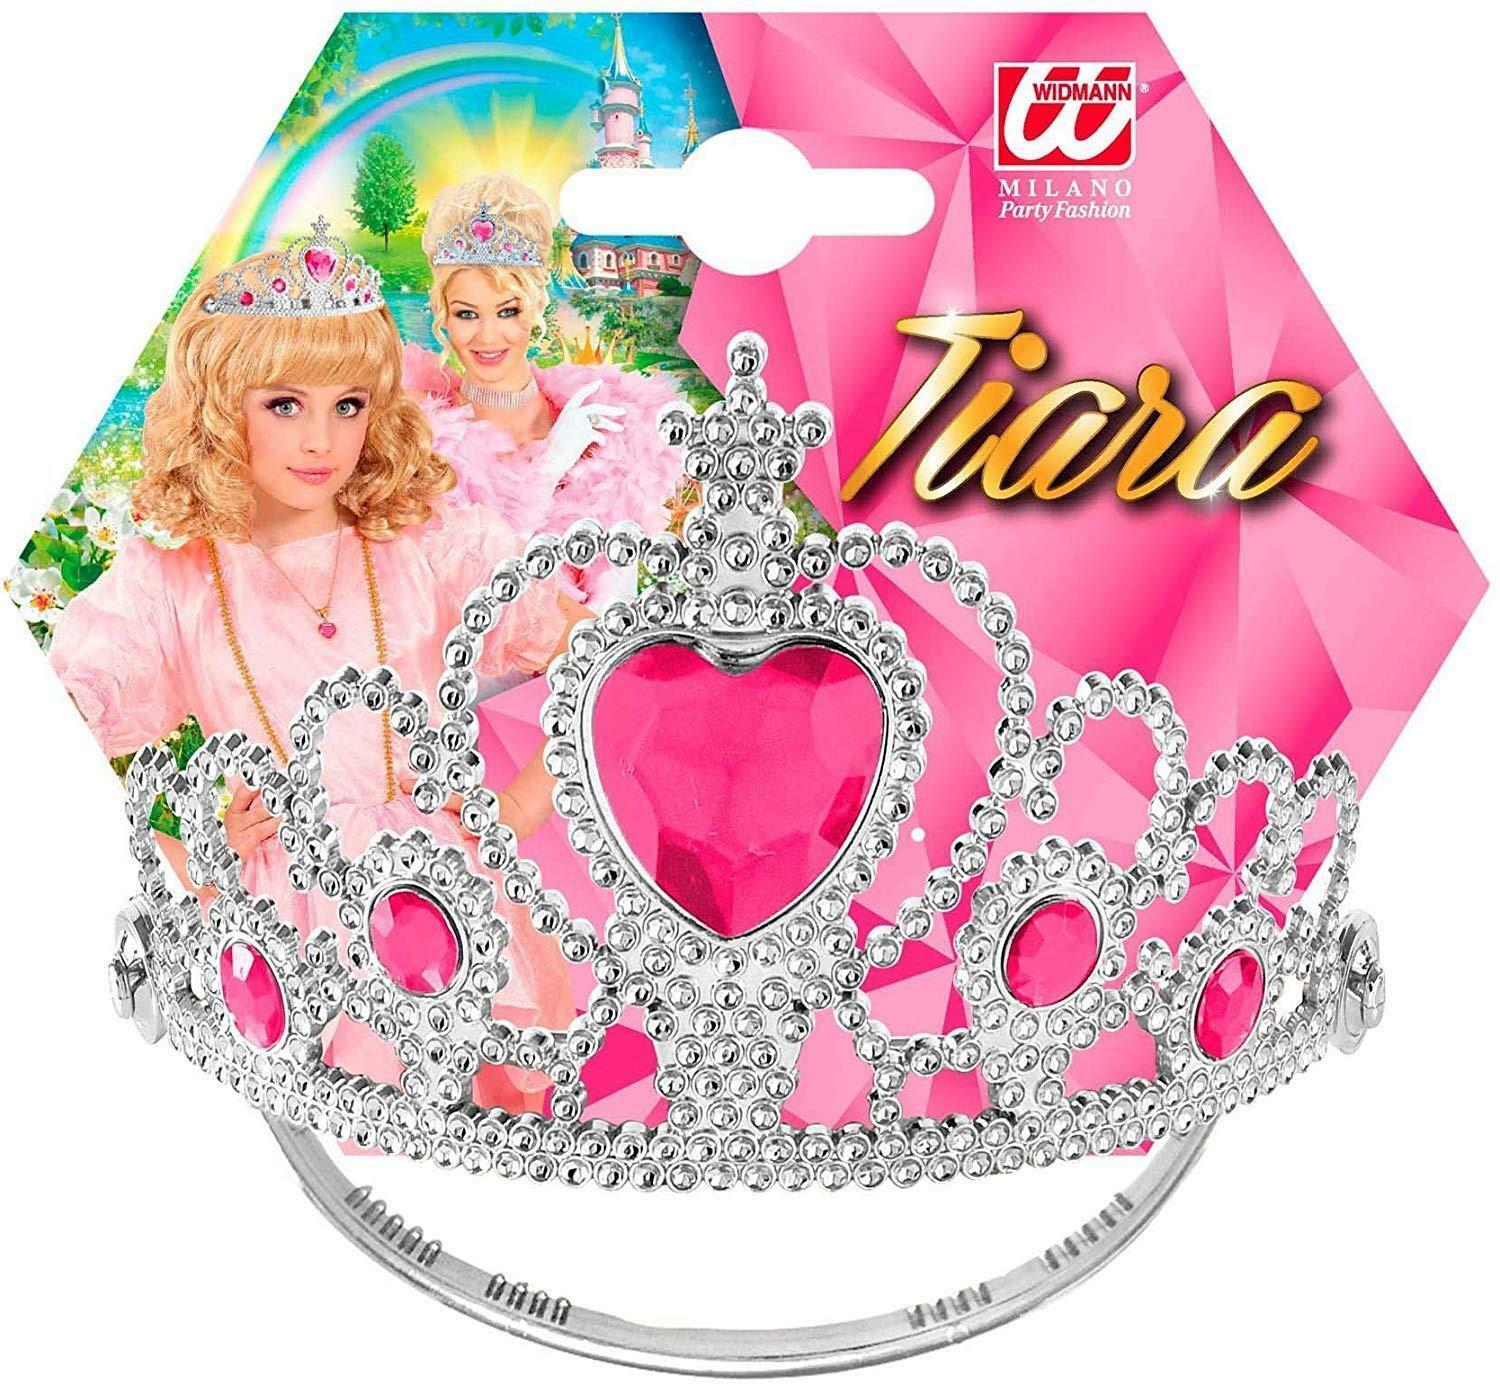 widmann tiara argento con gemme rosa